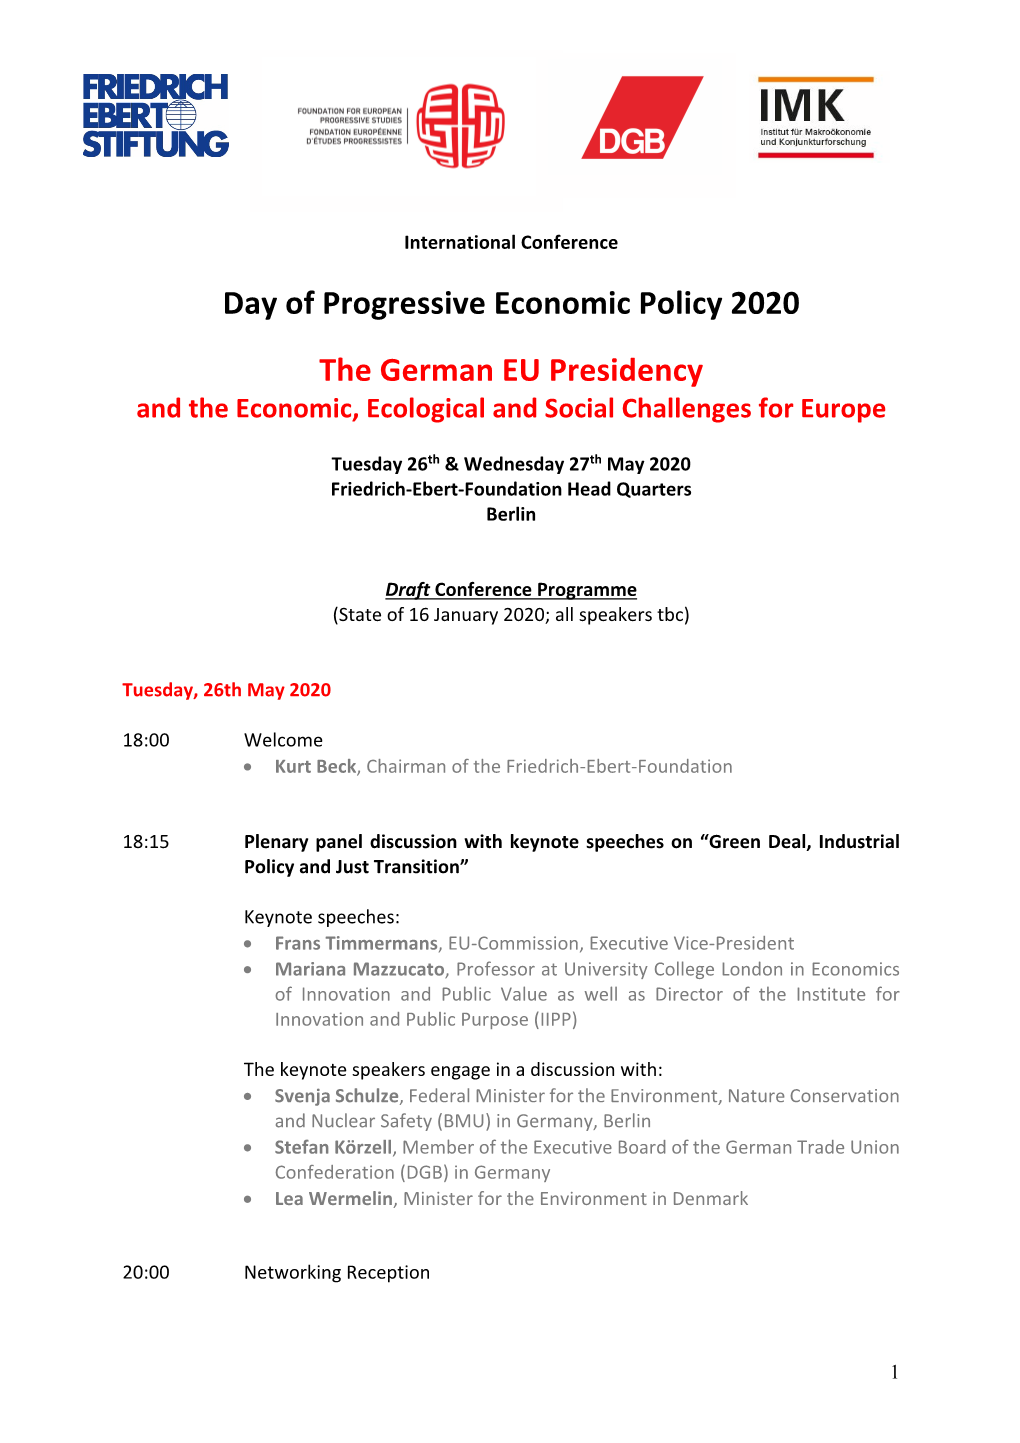 Program Day of Progressive Economic Policy 2020